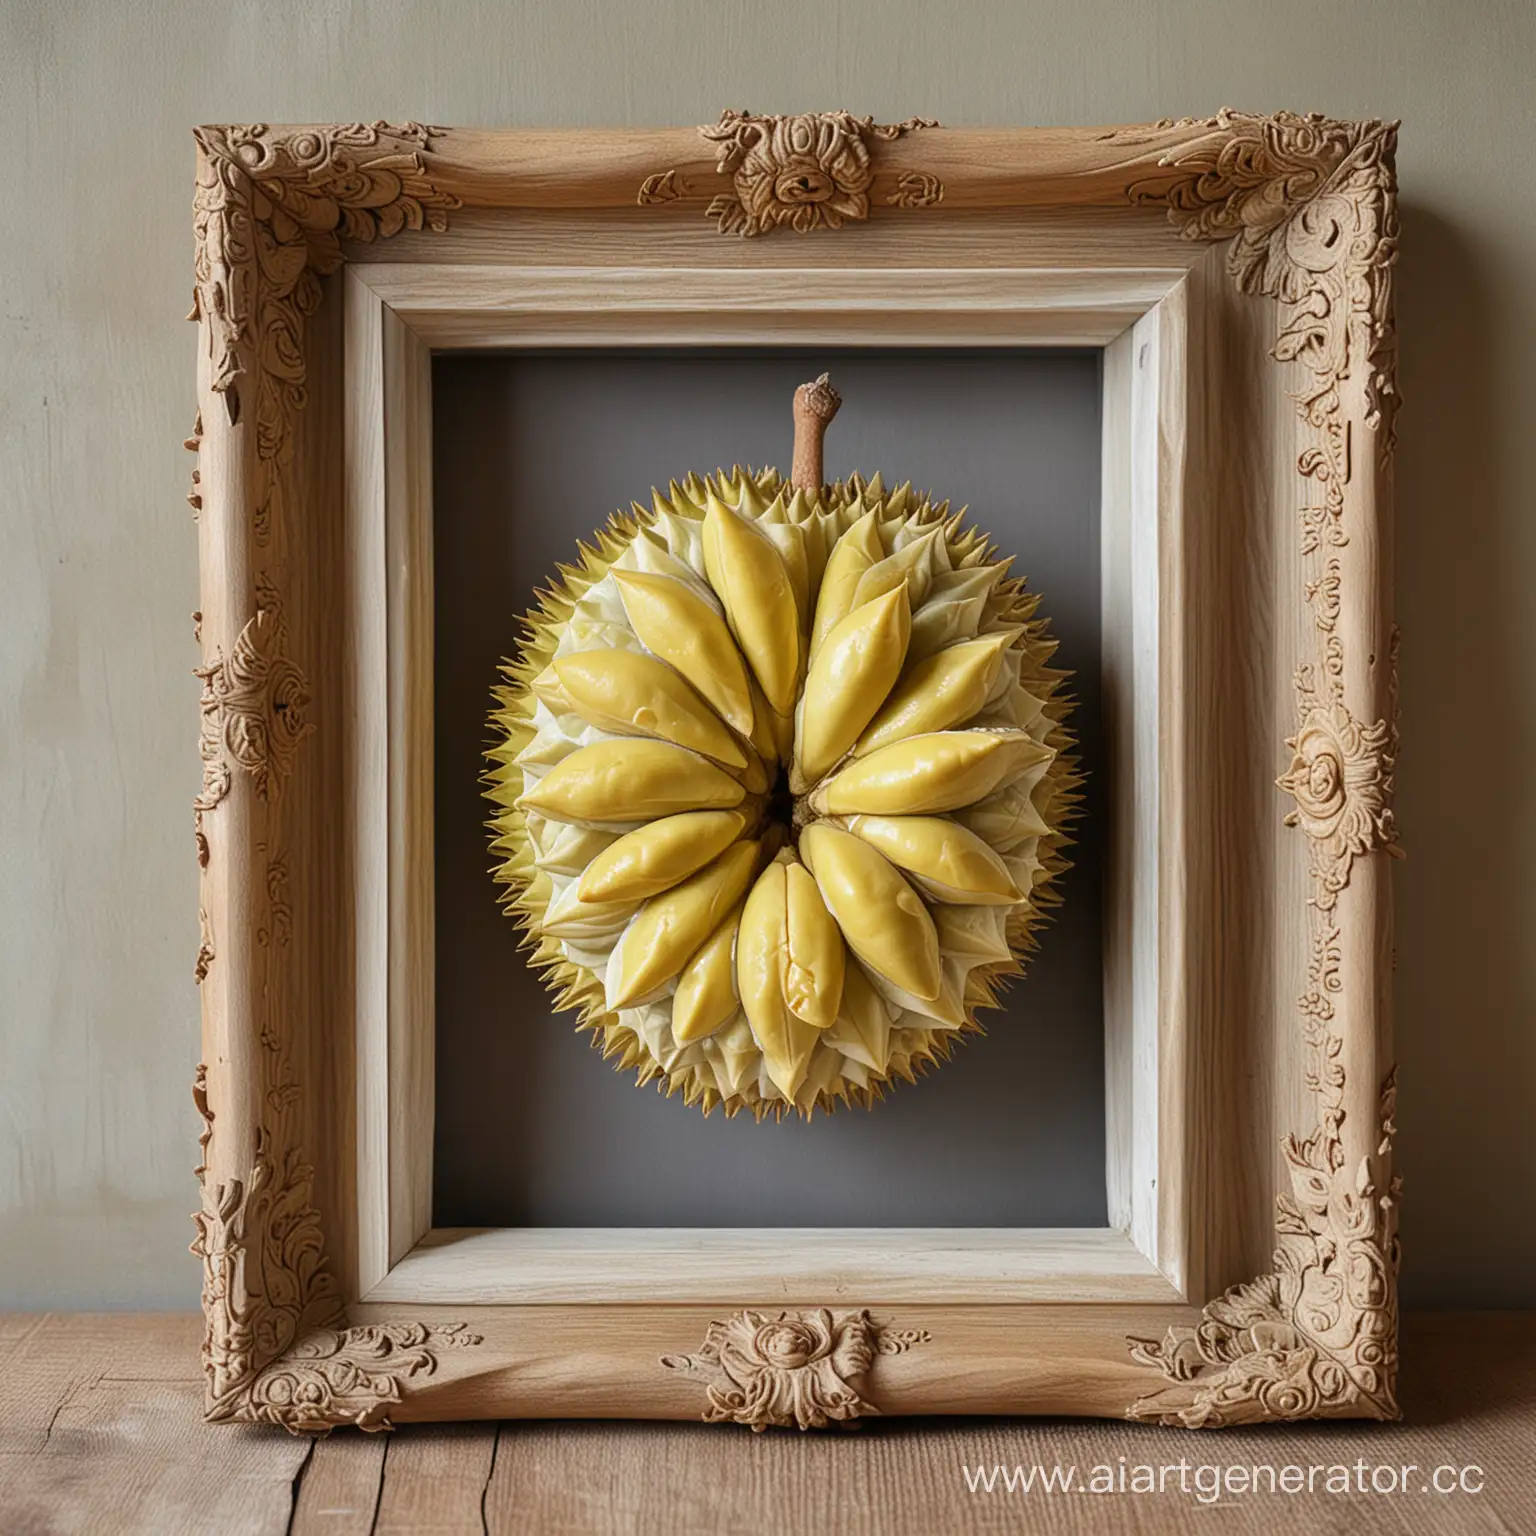 Youthful-Durian-in-Elegant-Portrait-Frame